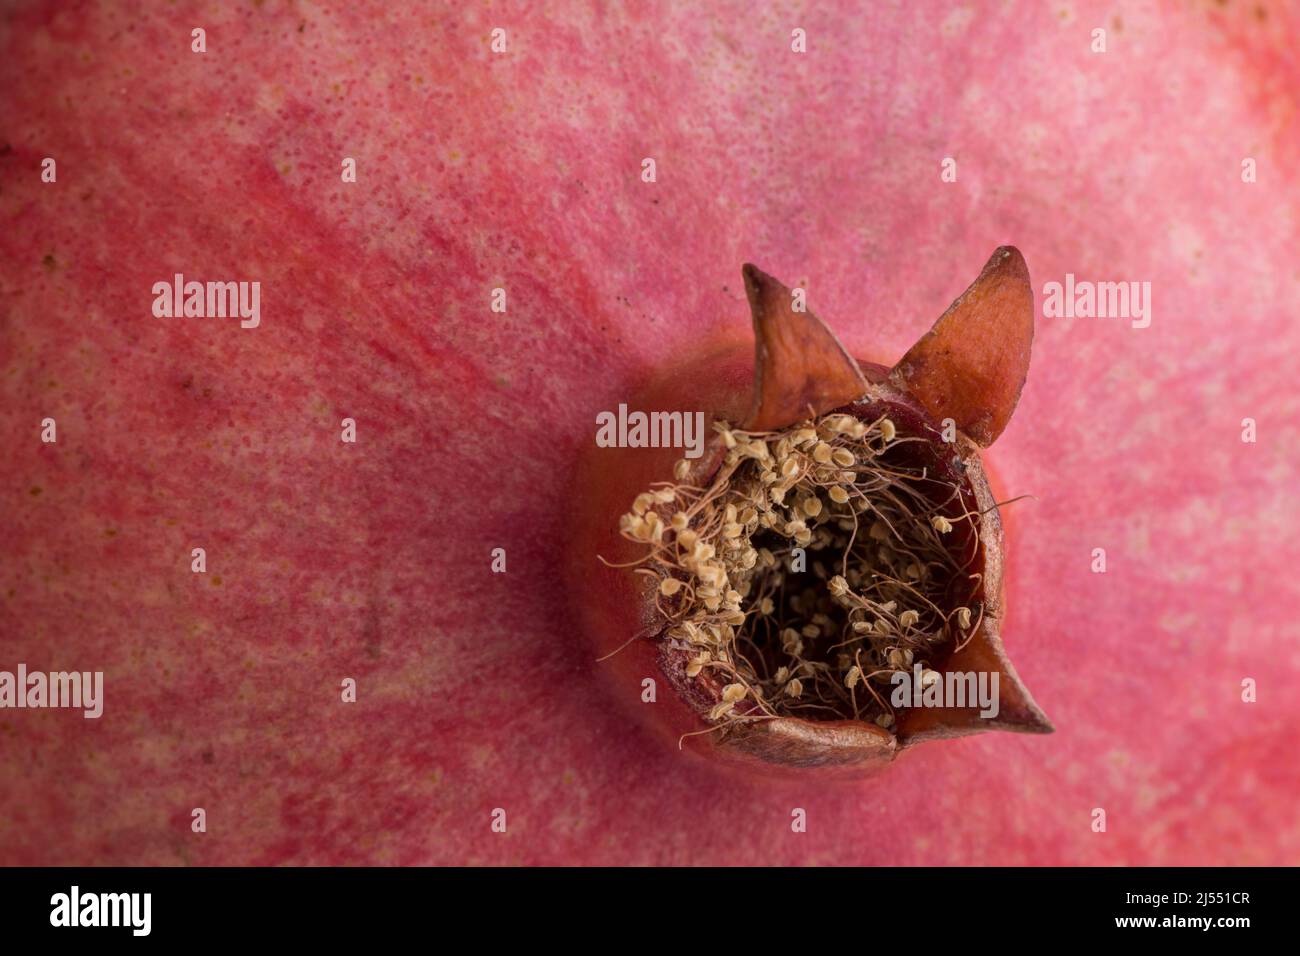 Ripen pomegranate close up skin texture Stock Photo